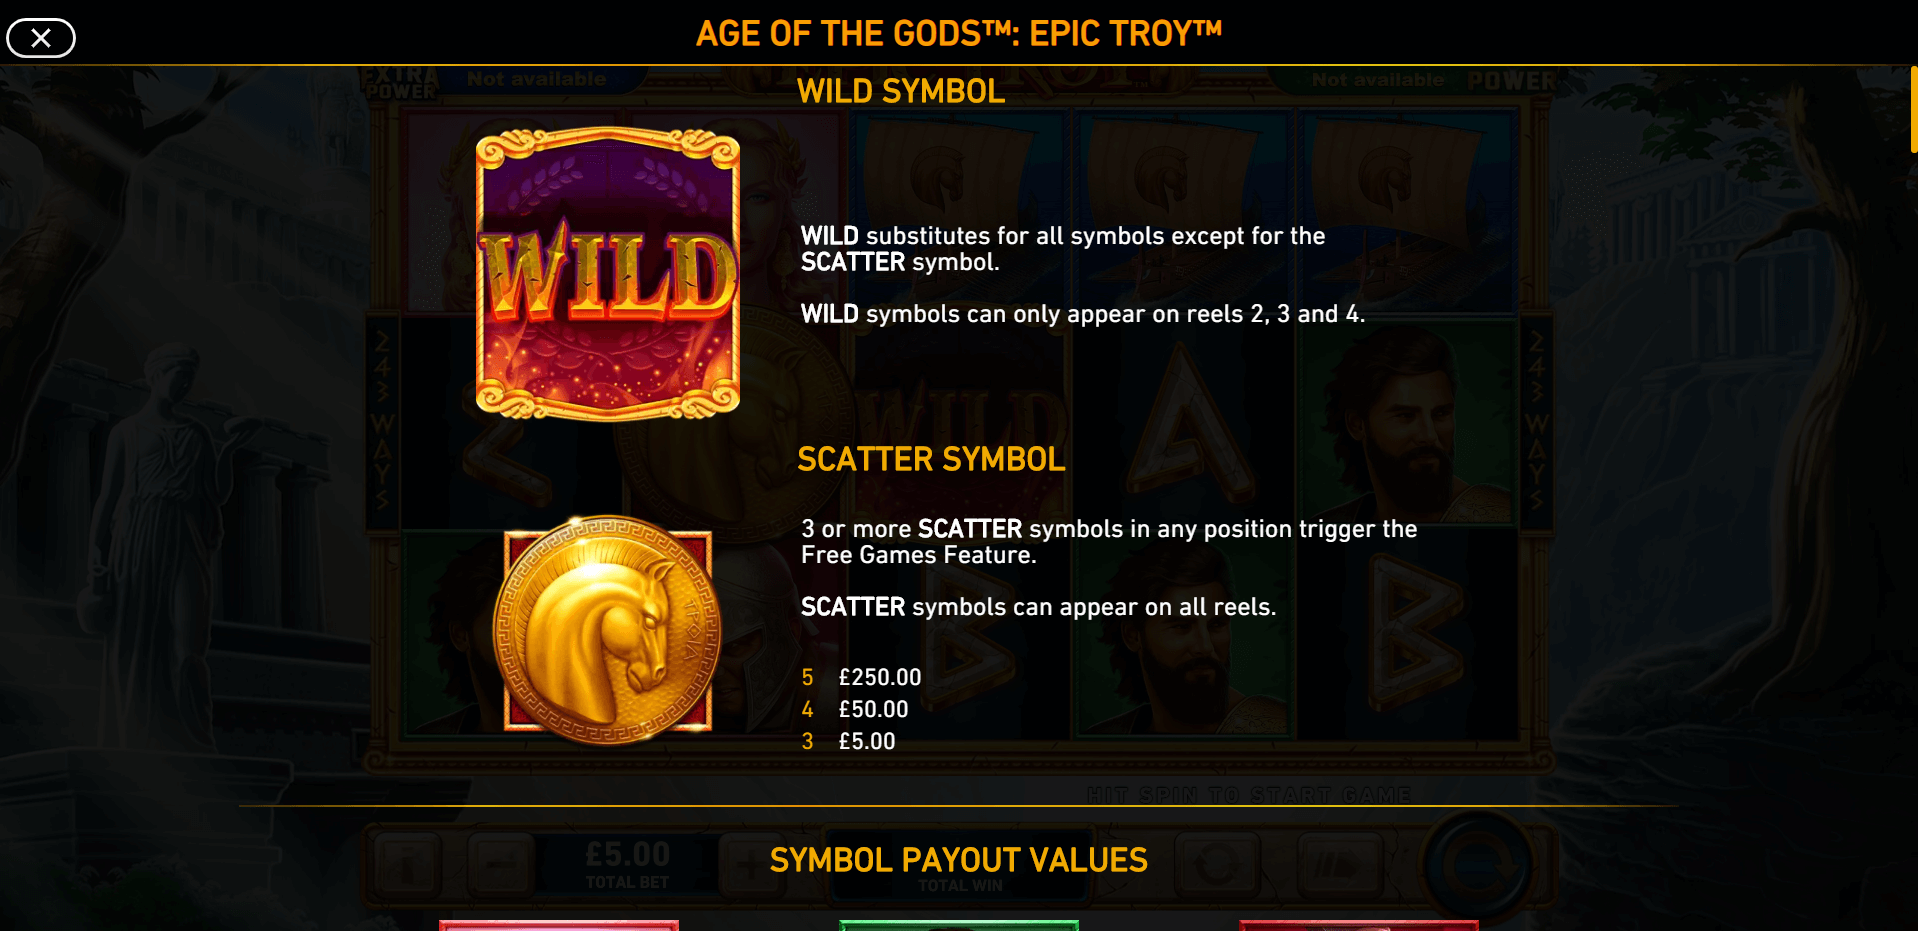 age of the gods epic troy slot machine detail image 1